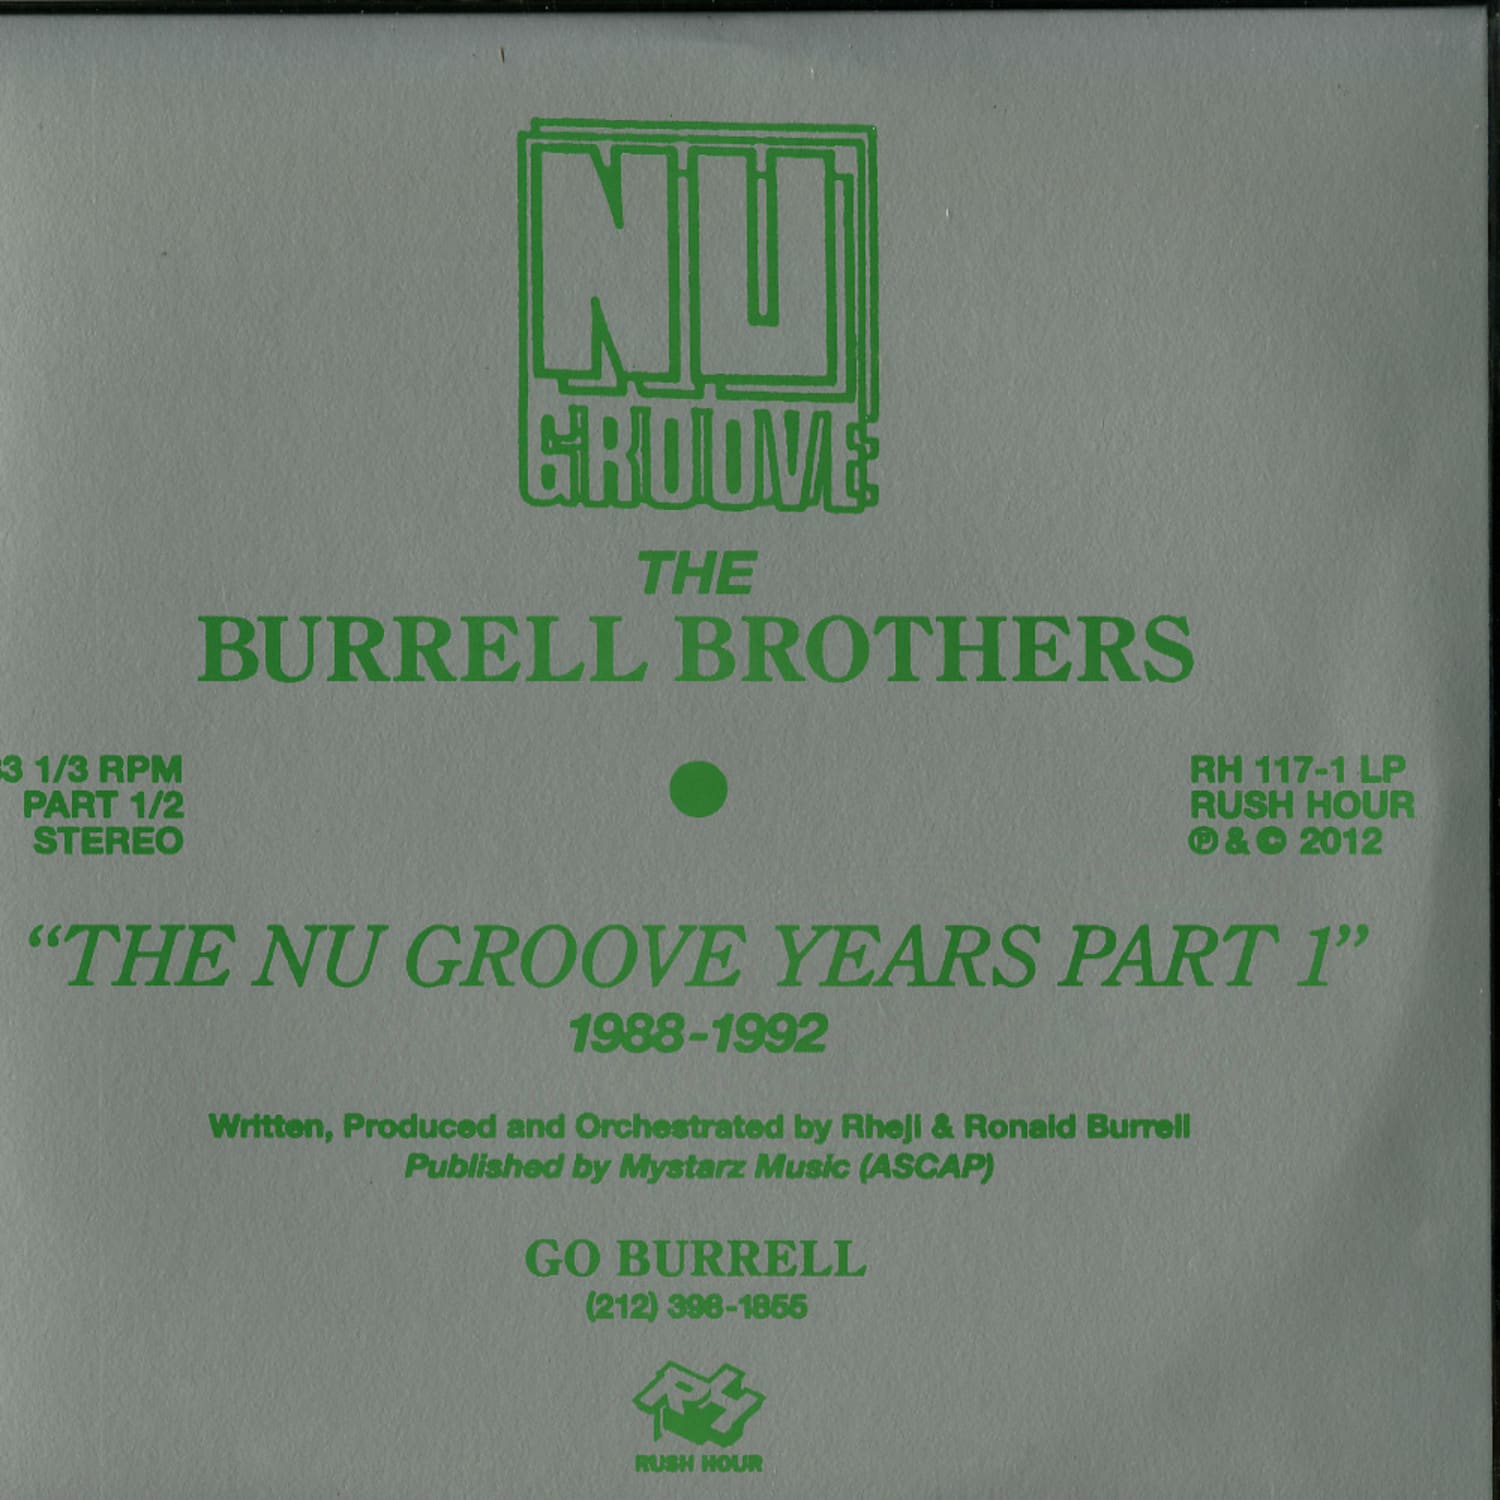 The Burrell Brothers - THE BURRELL BROTHERS - THE NU GROOVE YEARS LP 1 